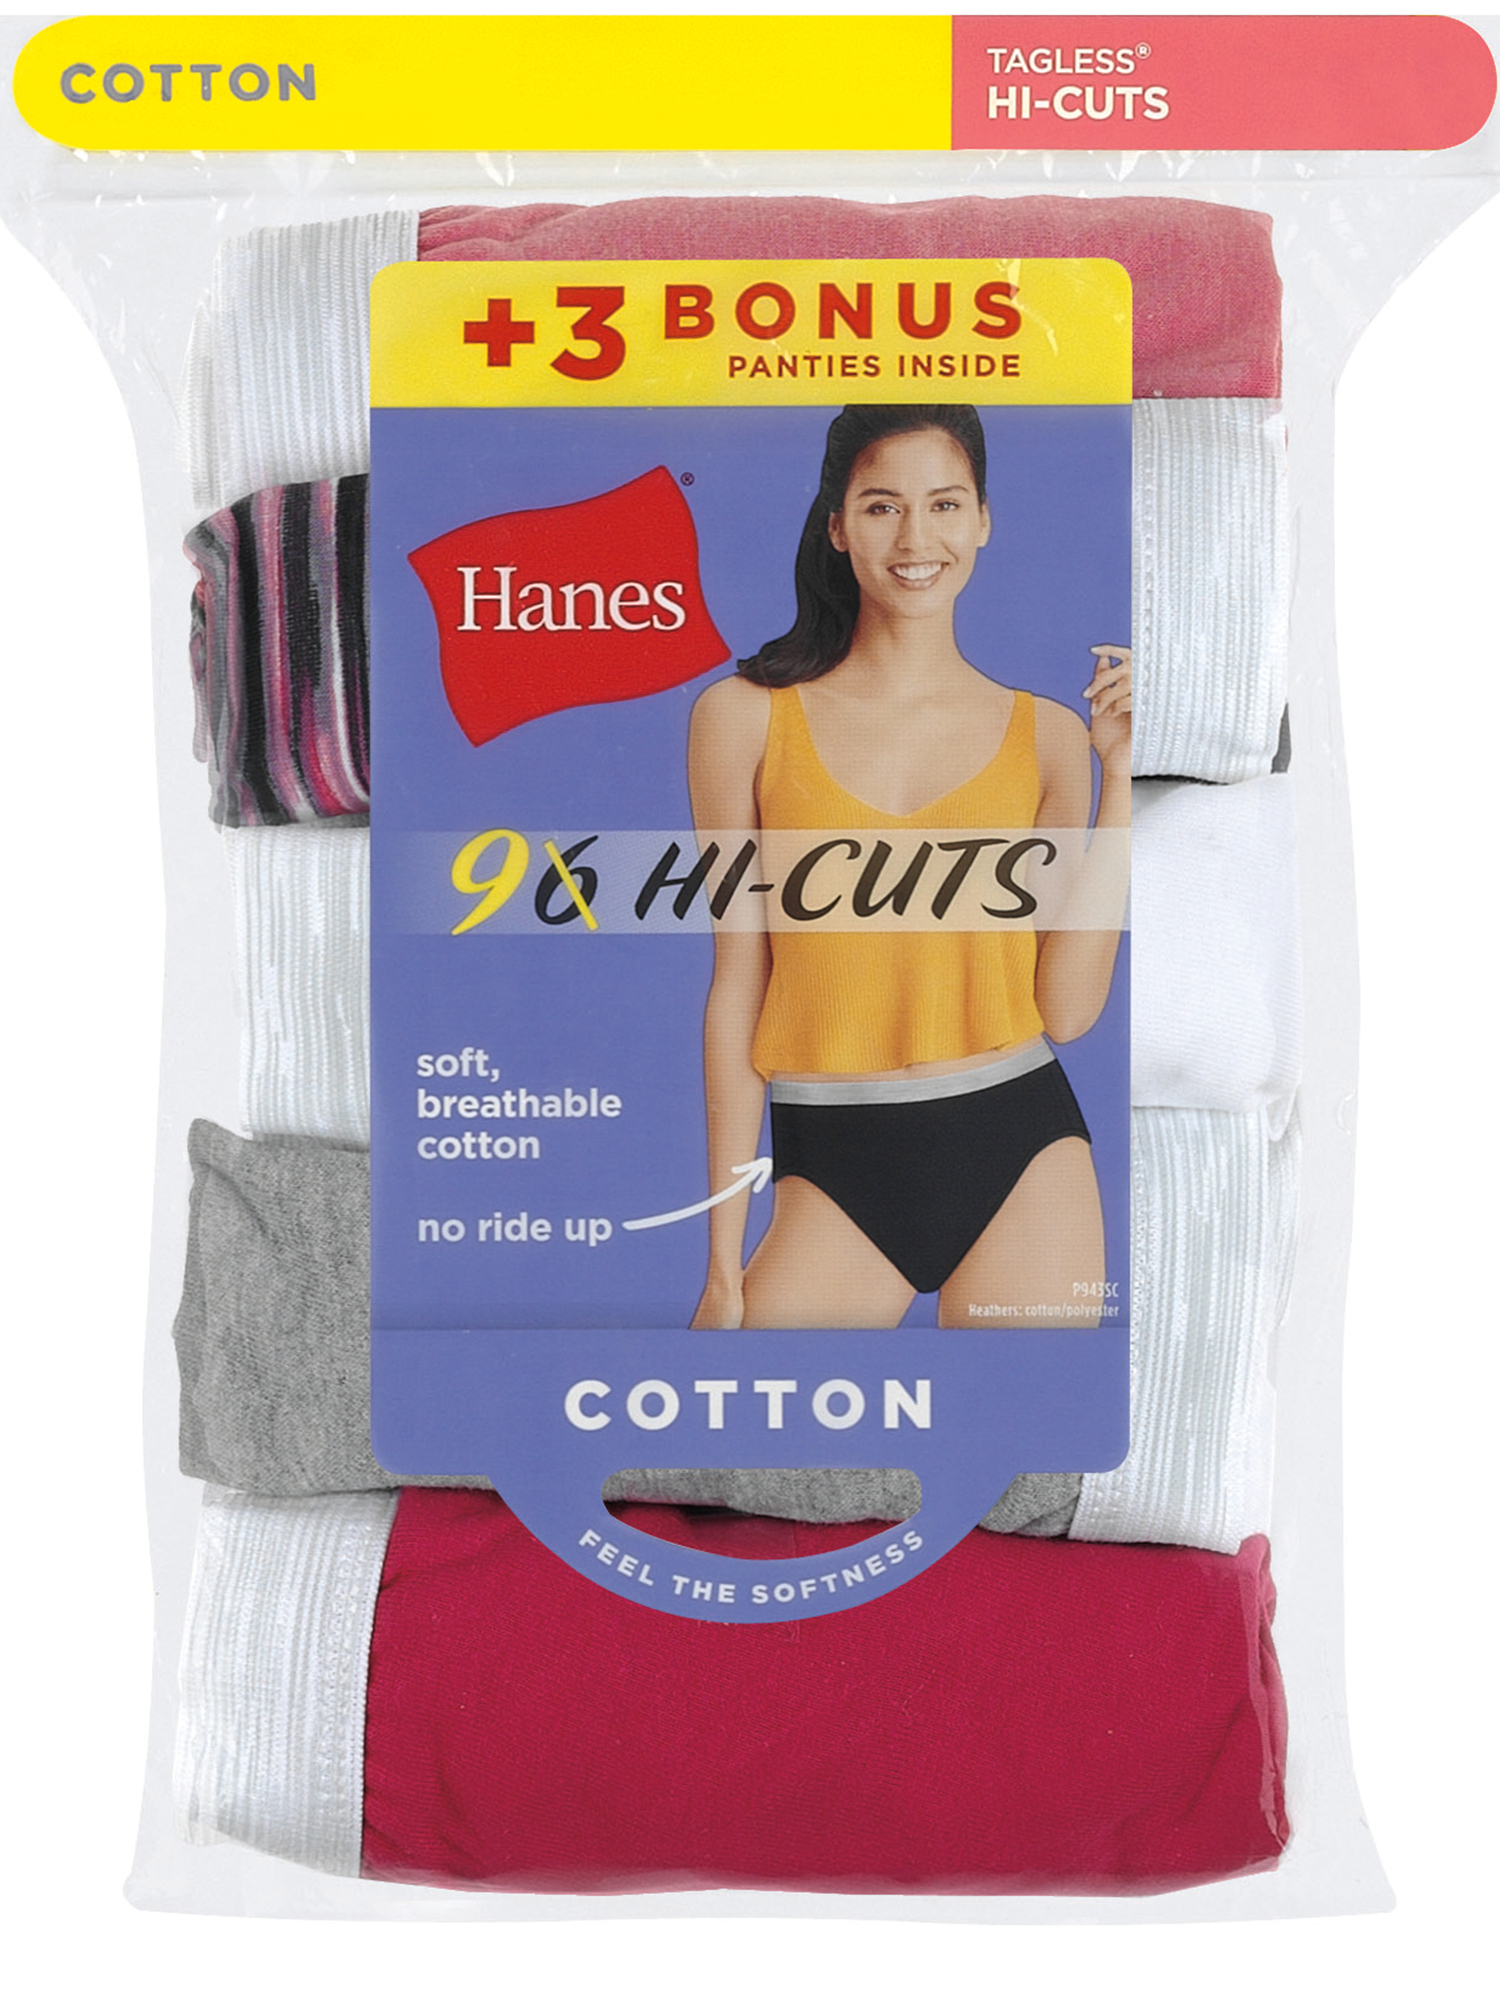 Hanes Women's Super Value Bonus Cool Comfort Sporty Cotton Hi-Cut Underwear, 6+3 Bonus Pack - image 4 of 7